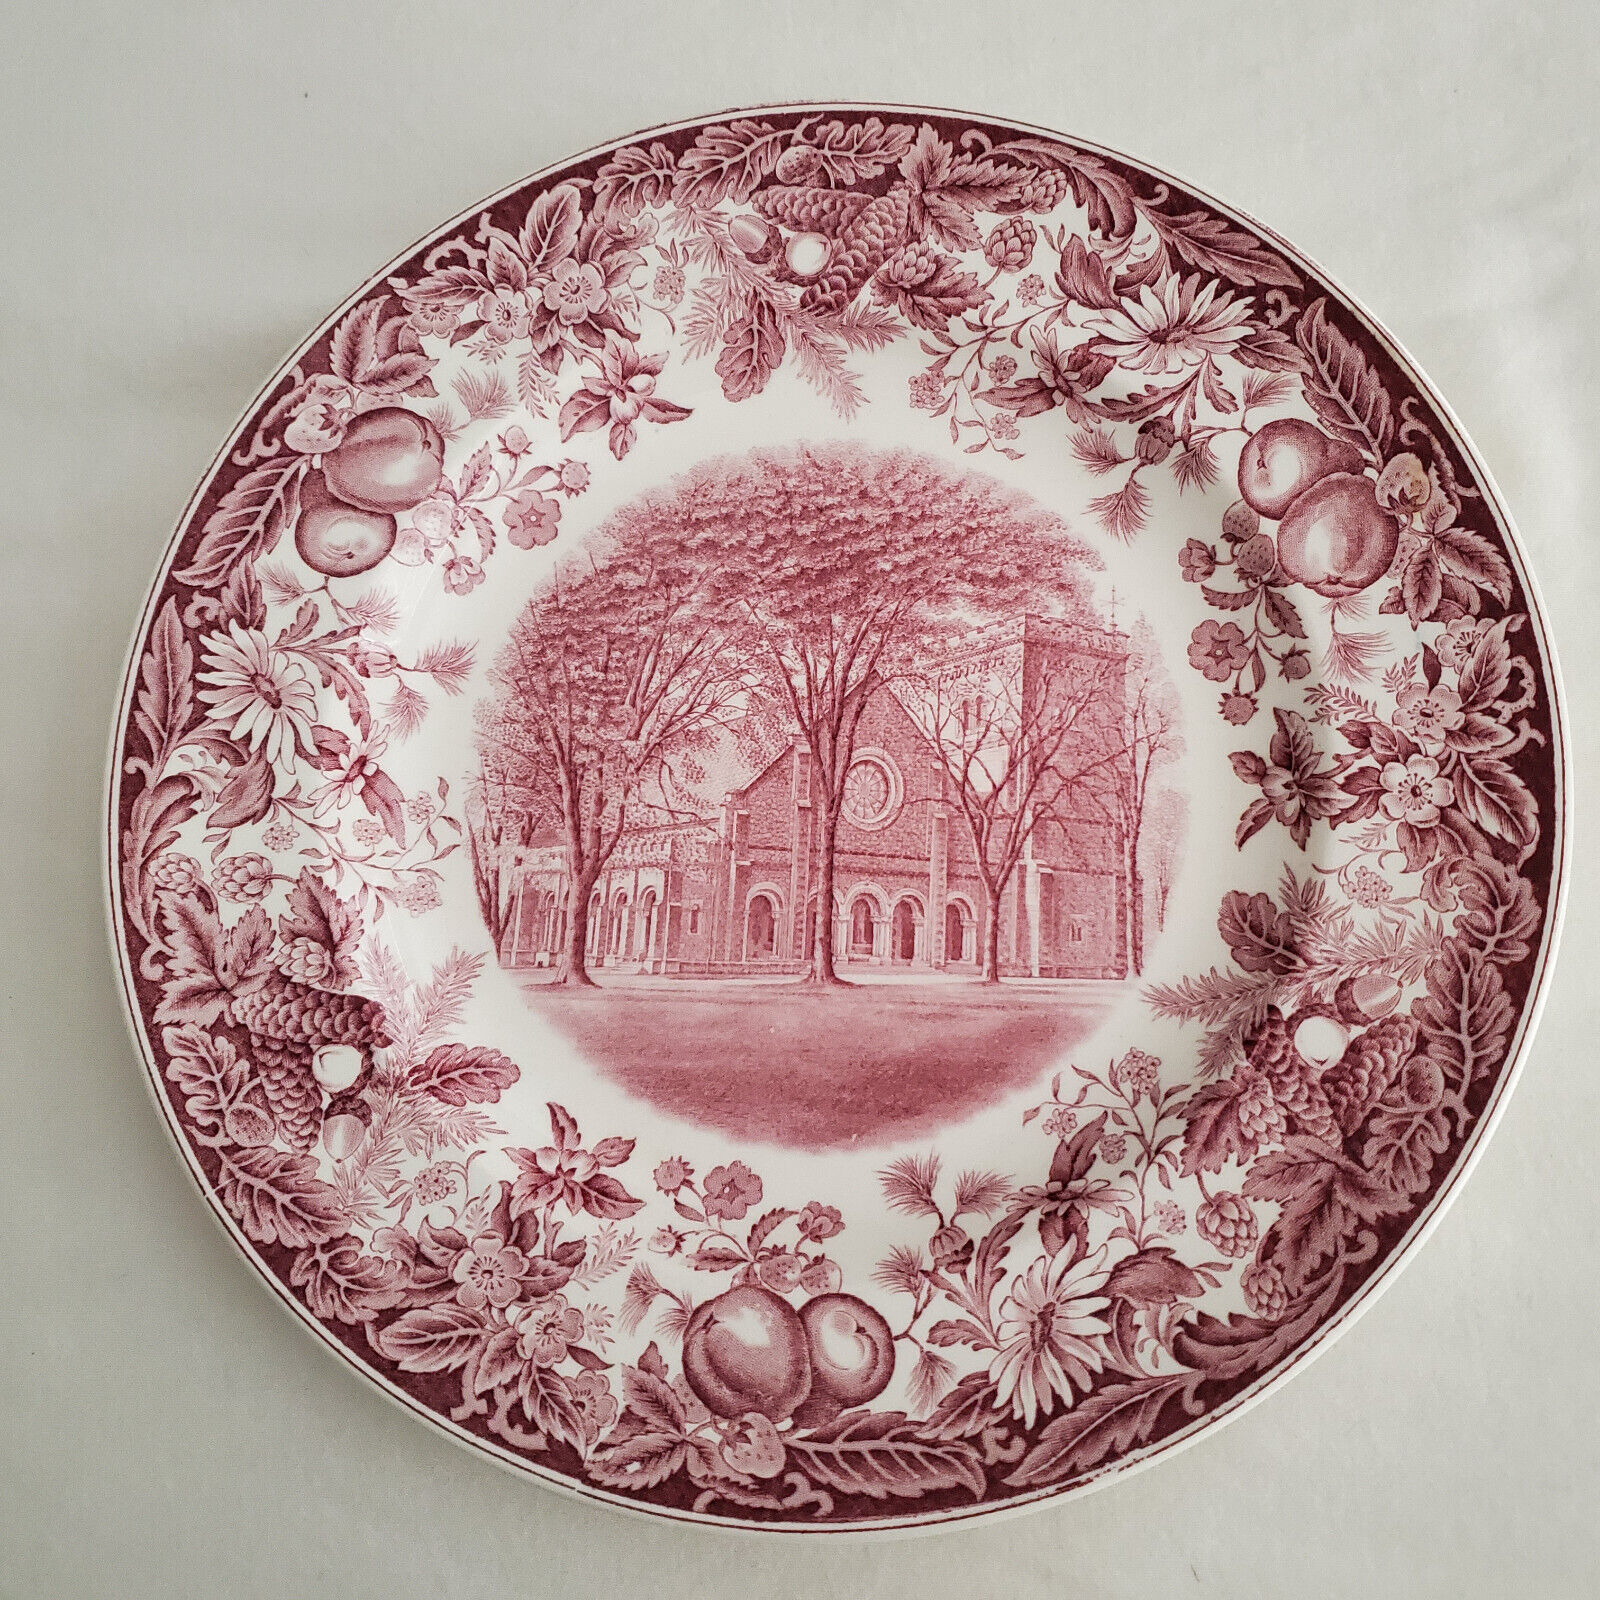 Vassar College Rare Wedgwood Commemorative Plate - The Chapel - Excellent Cond